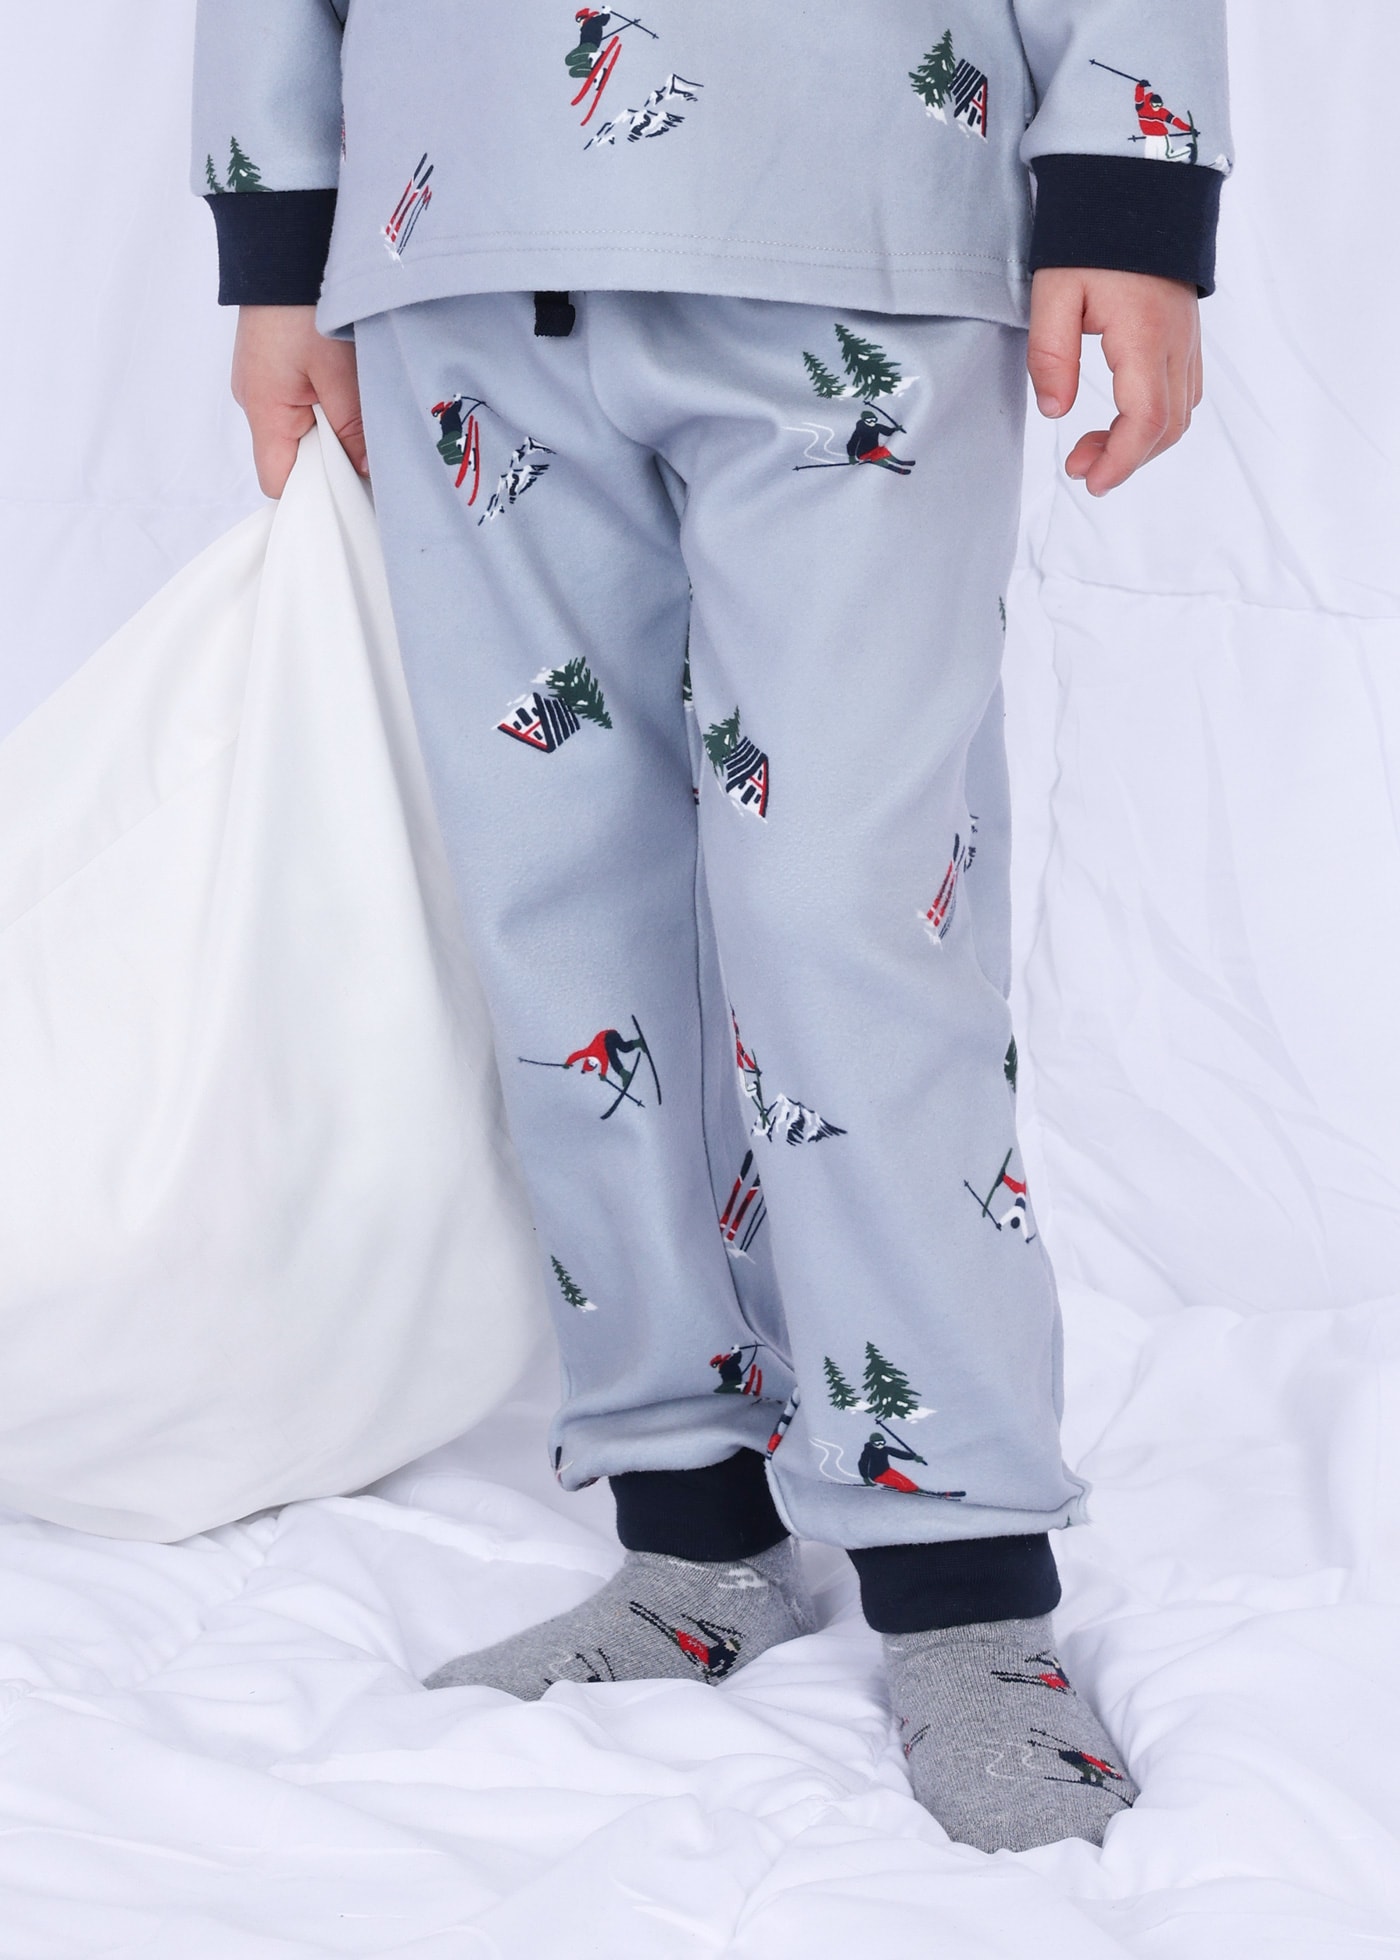 Pijama polar niño | Mayoral ®